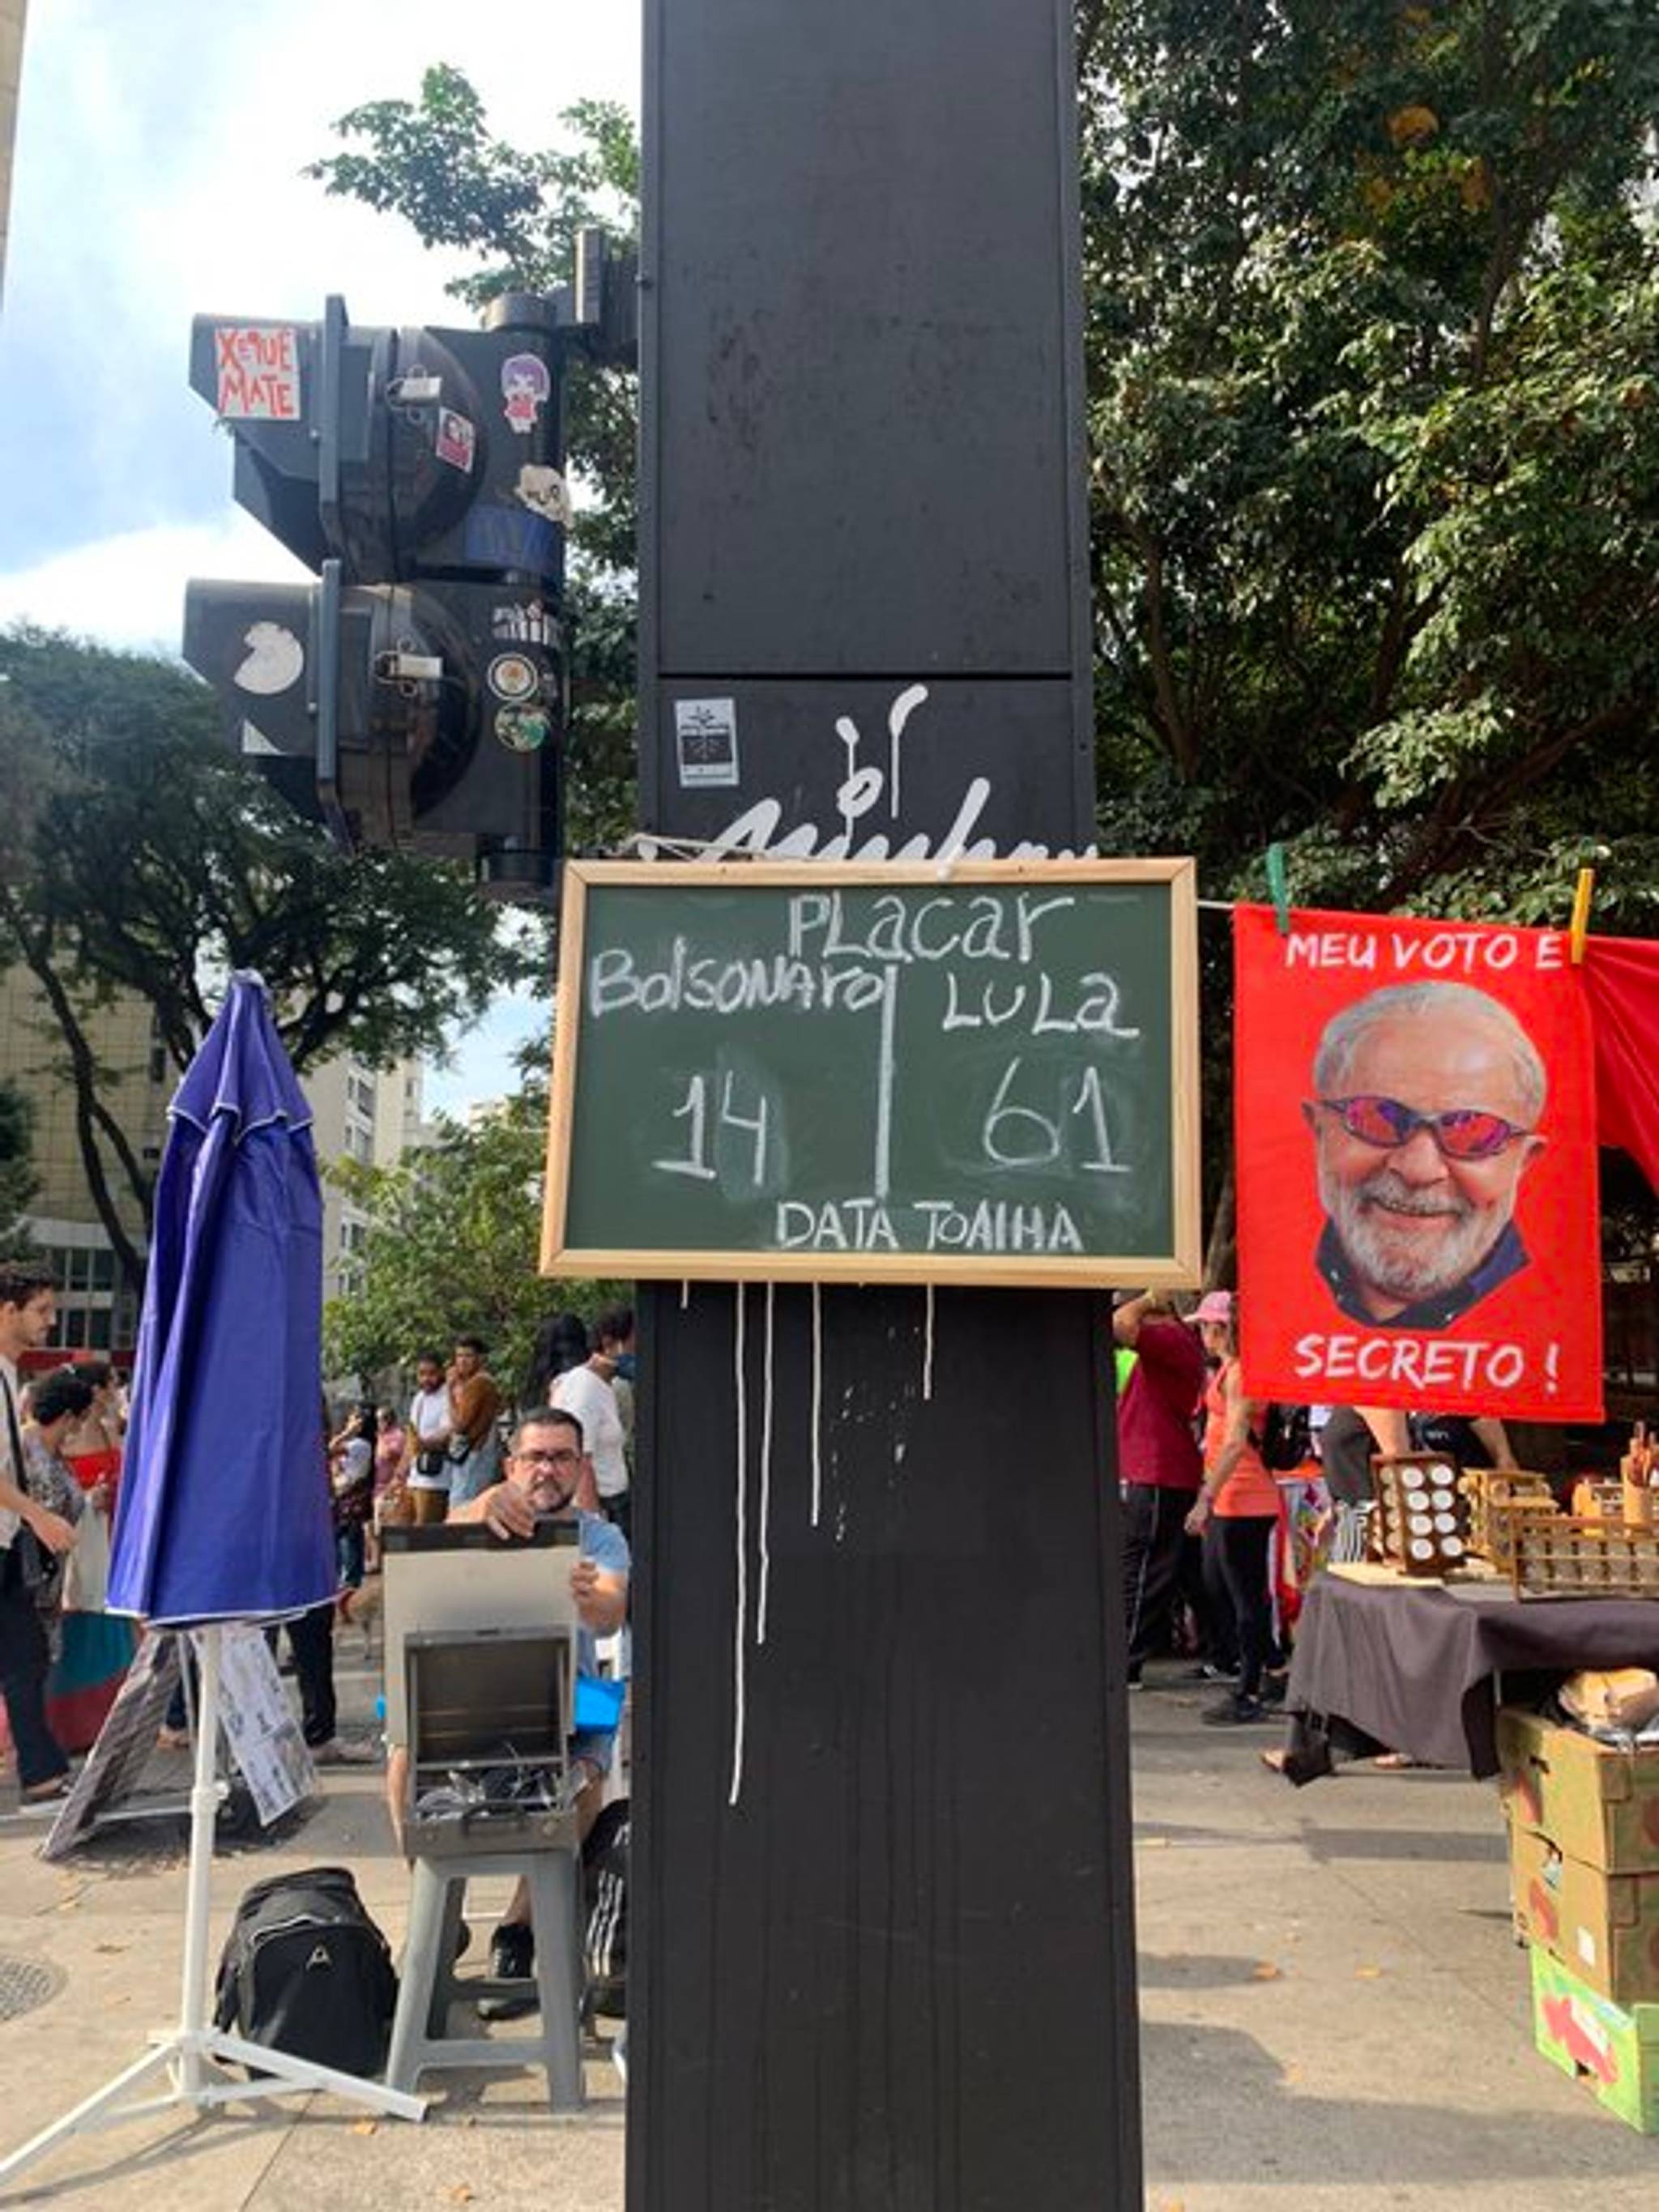 Brazillians use memes to make politics less intimidating